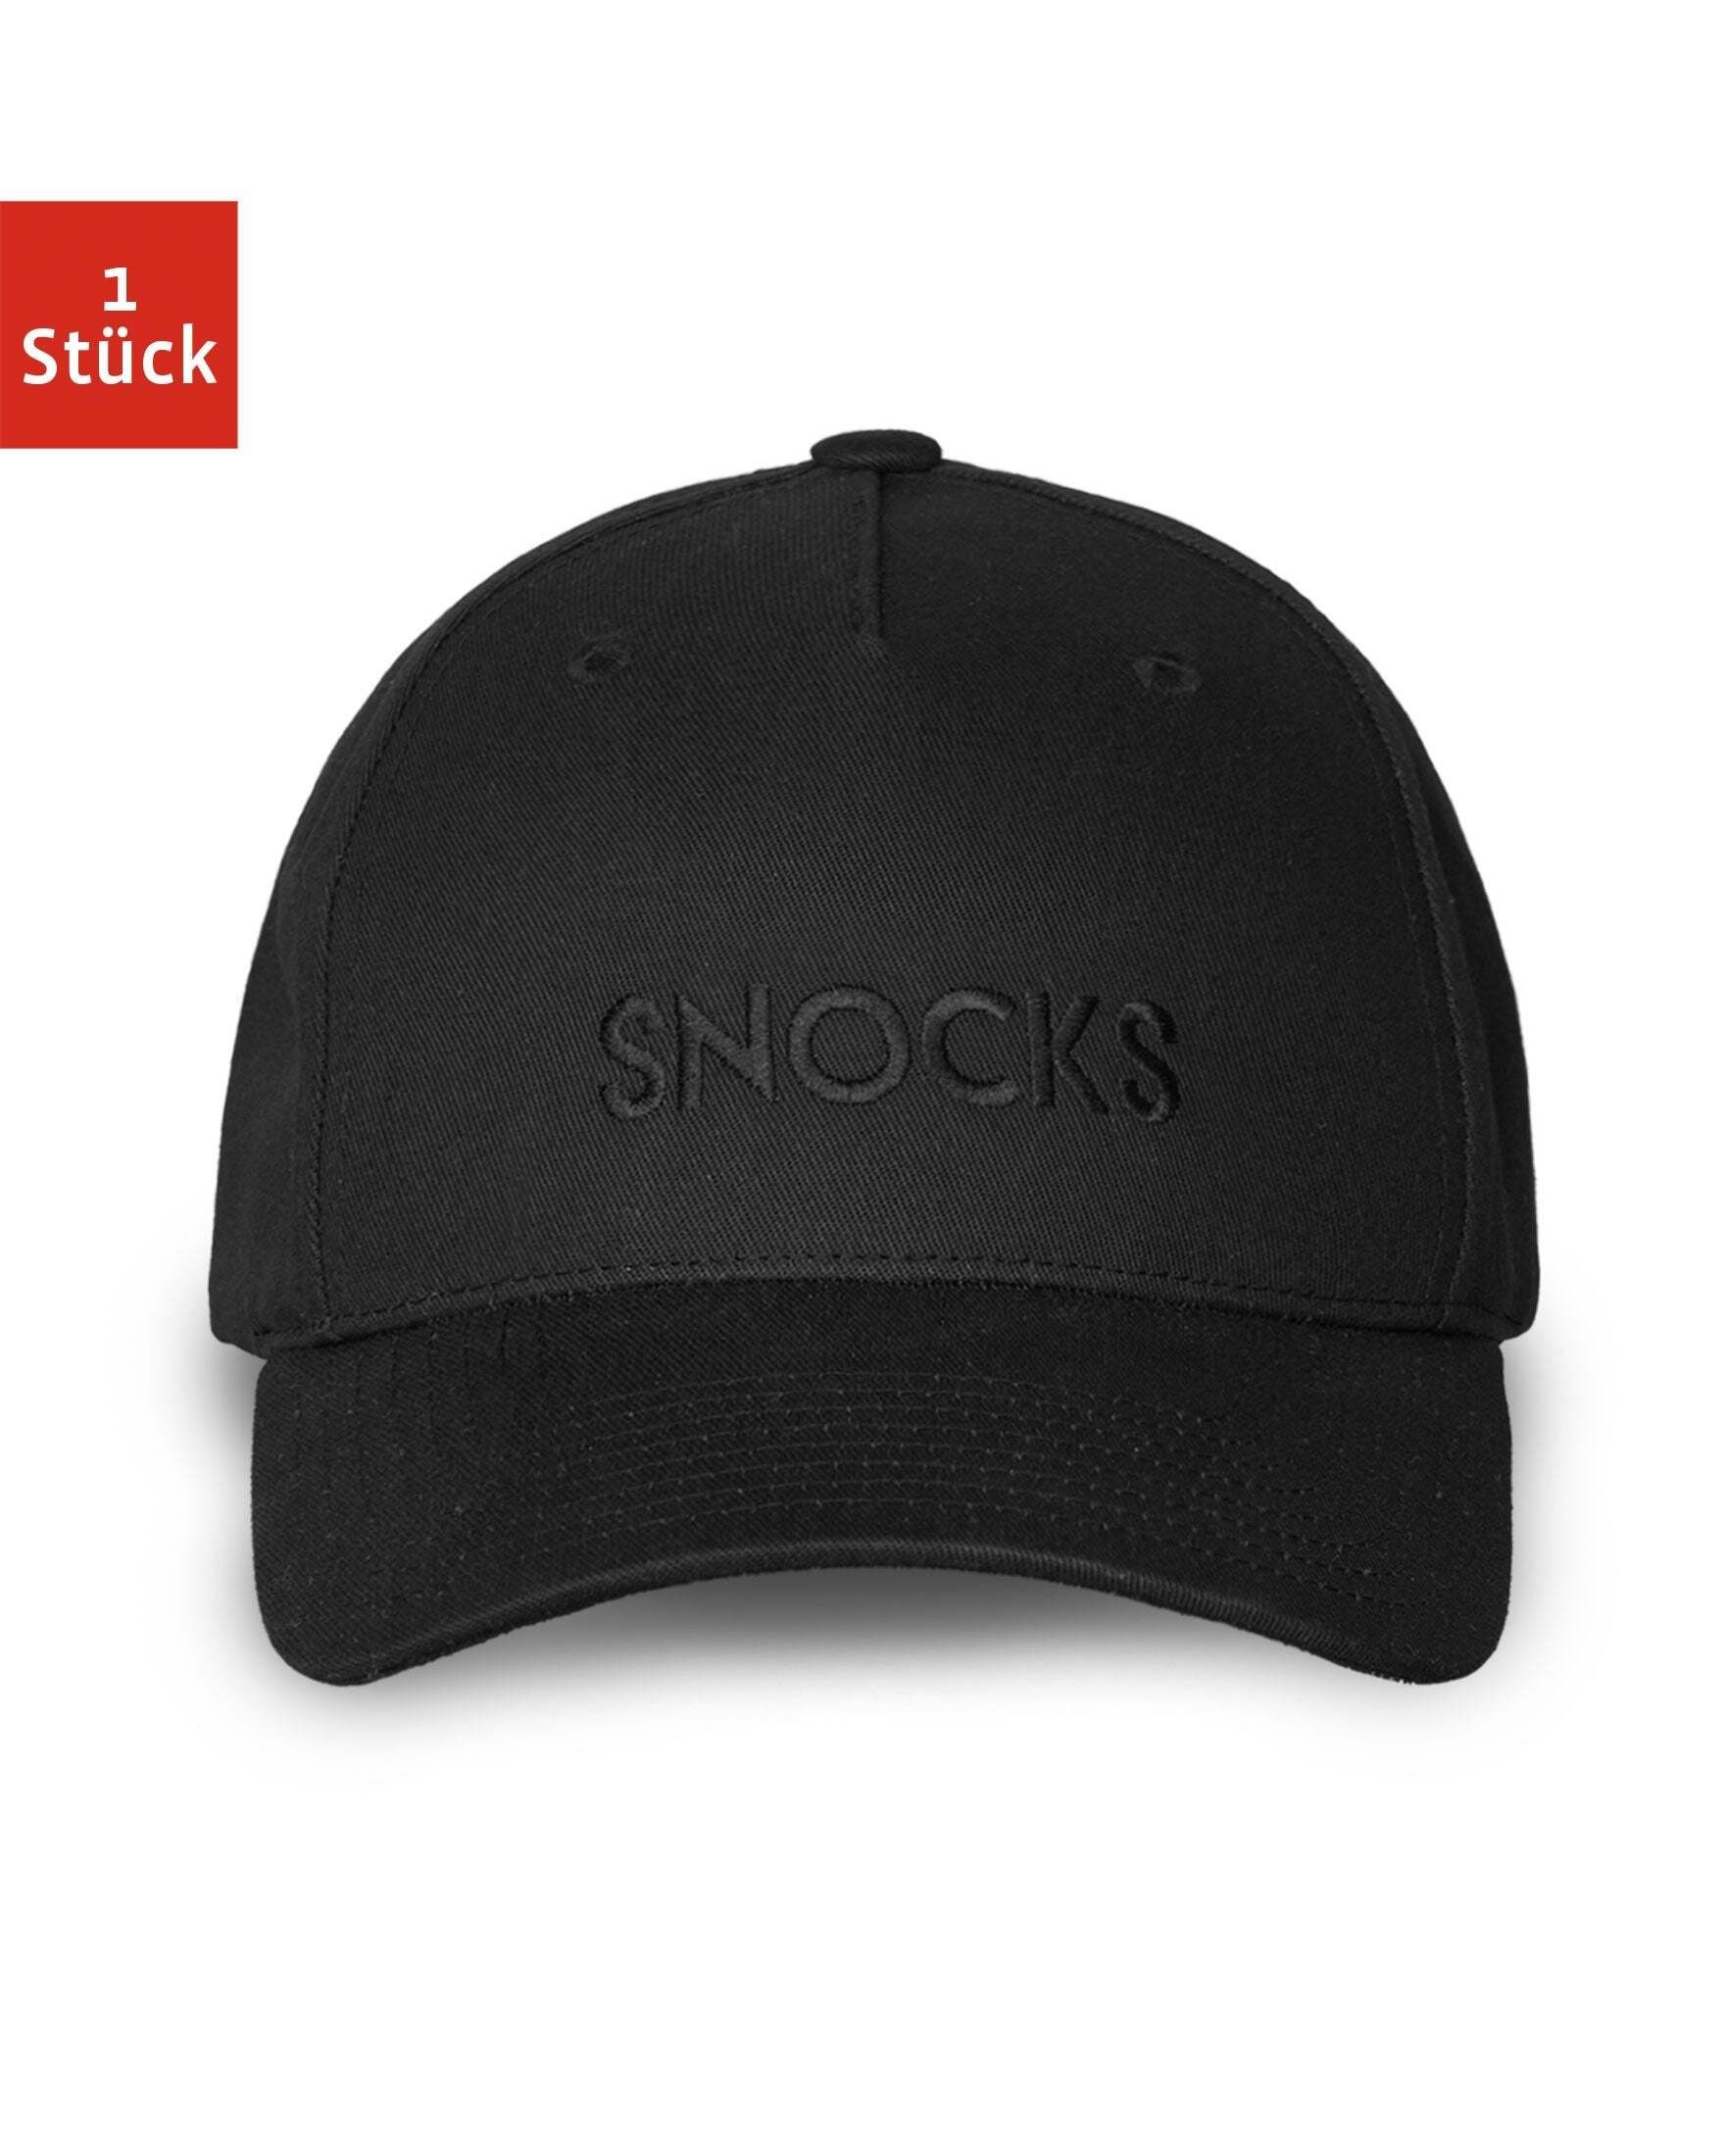 SNOCKS Fitted Cap Base Cap Baseballmütze Snapback größenverstellbar mit SNOCKS Logo